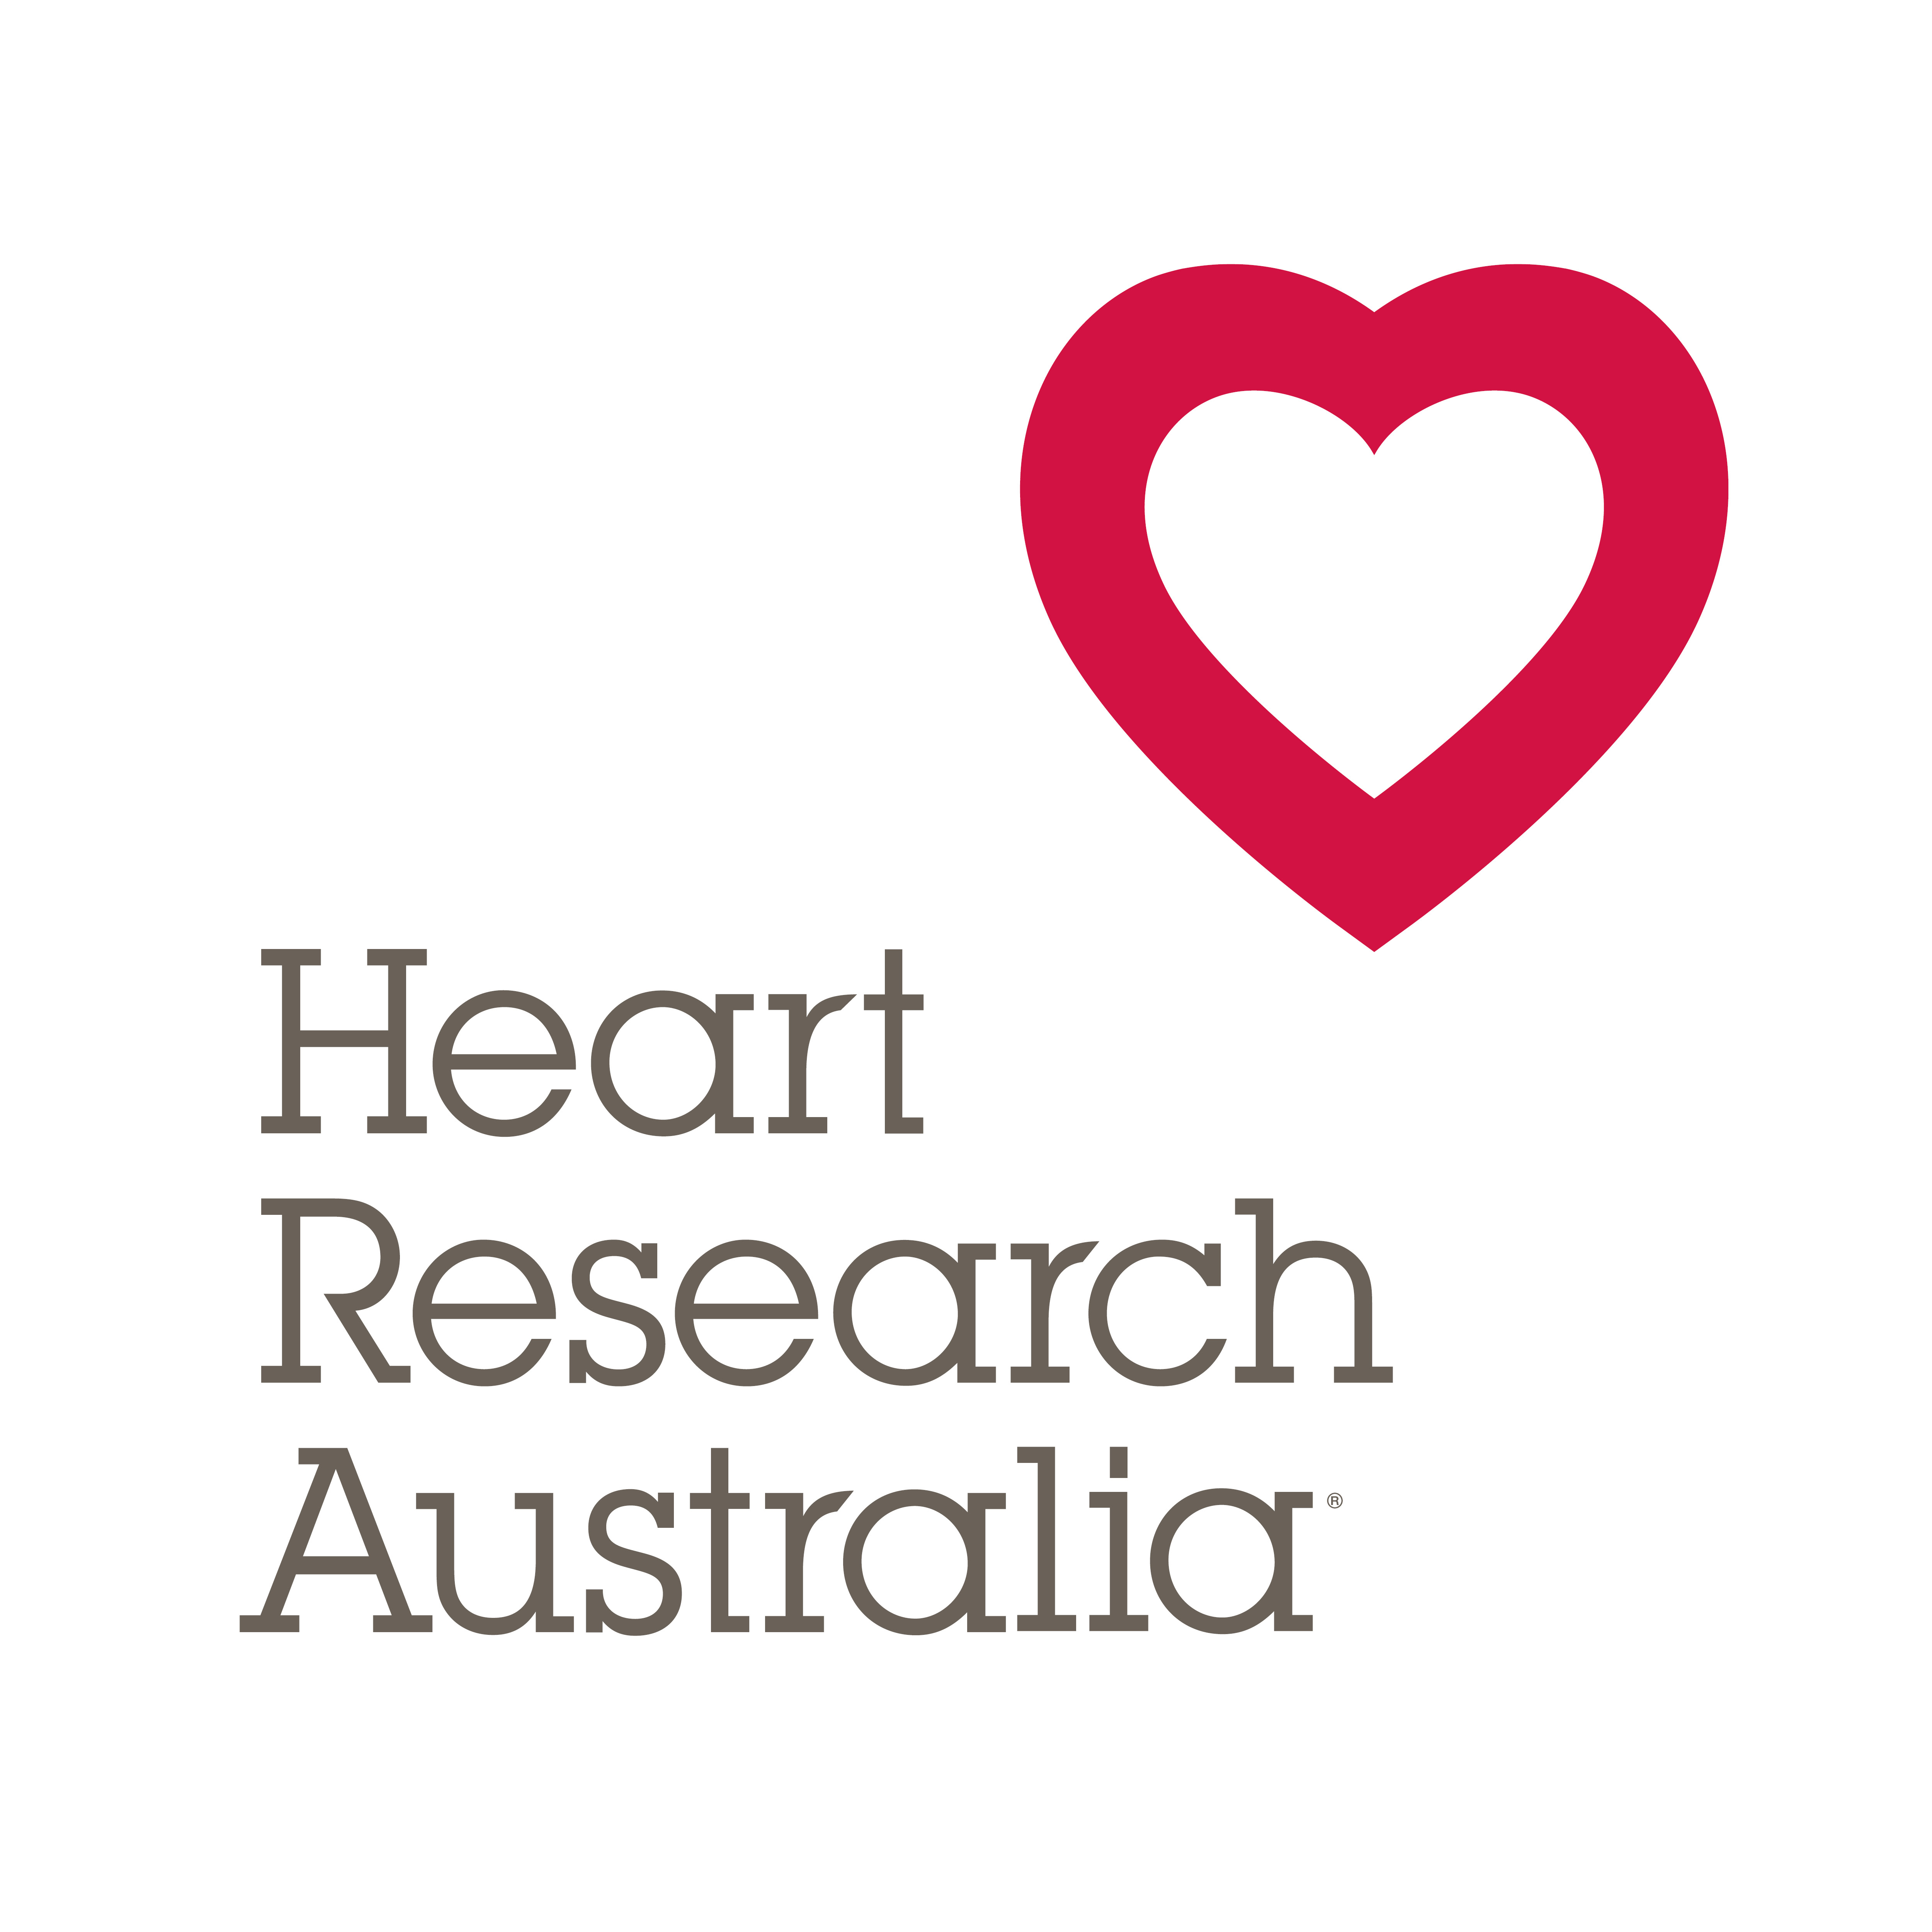 Heart Research Australia logo